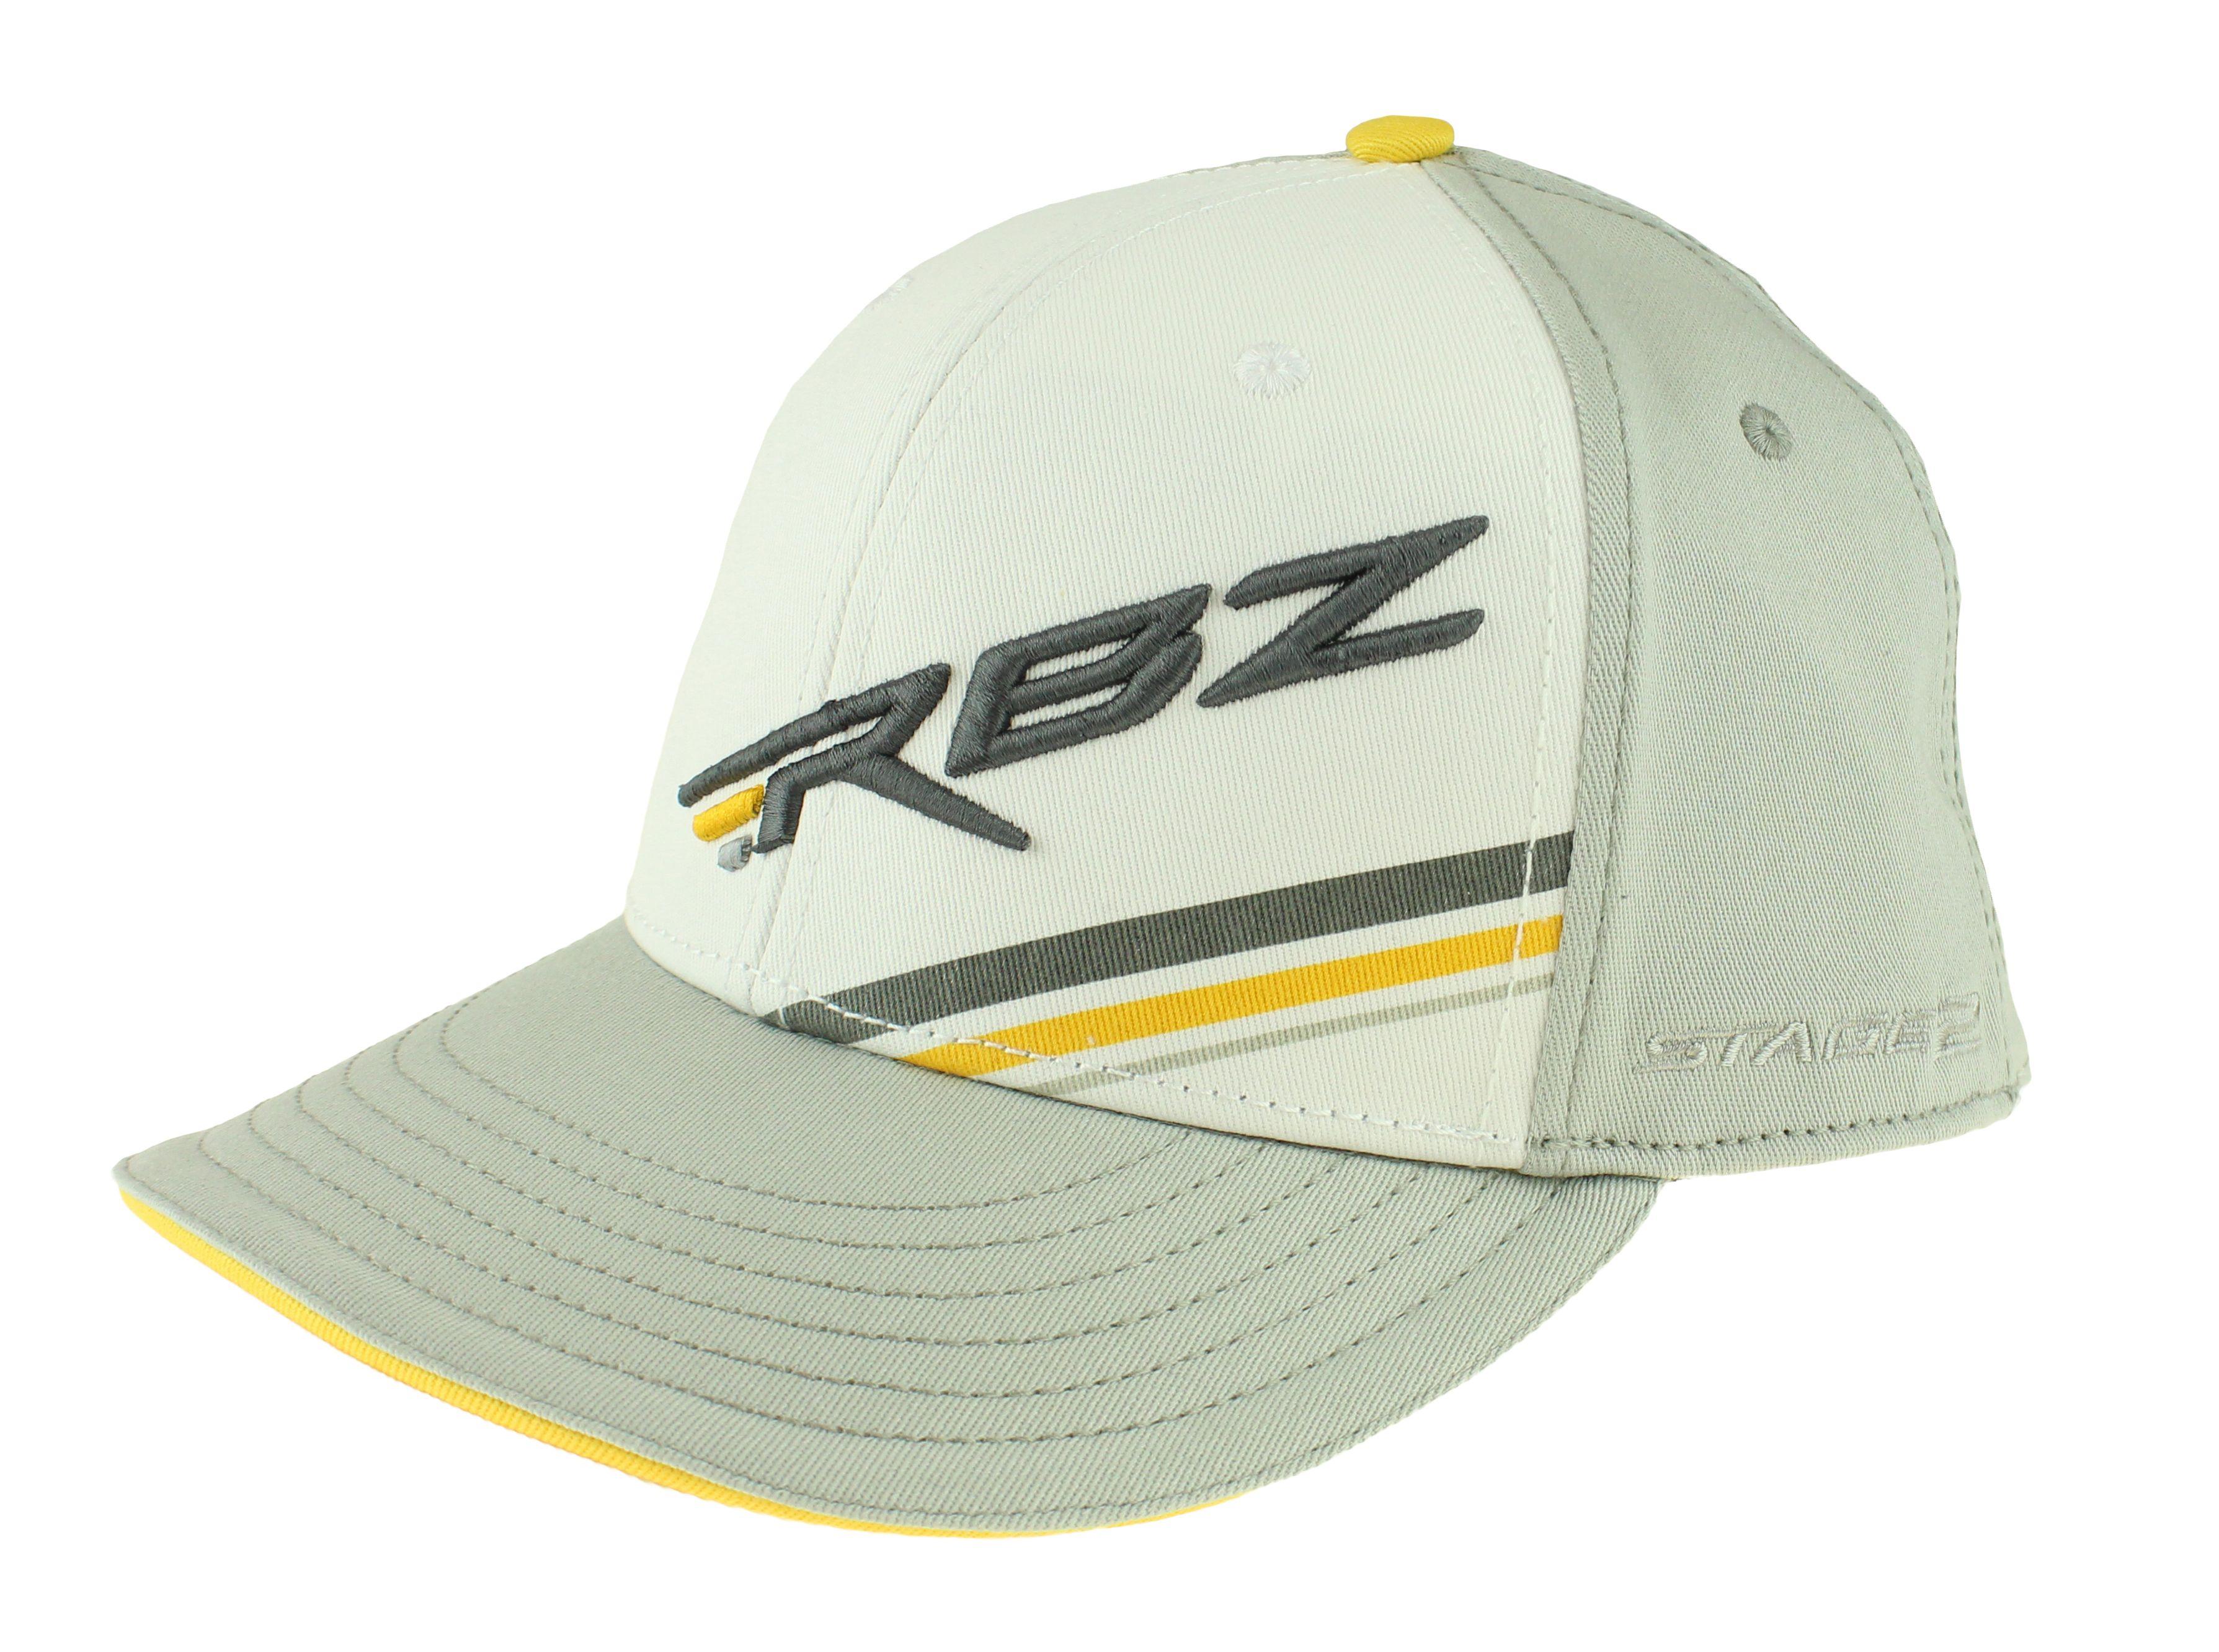 RBZ Logo - Details about TaylorMade Rocketballz RBZ Stage 2 Mens Flat Bill Golf Hat  Cap, White - Grey